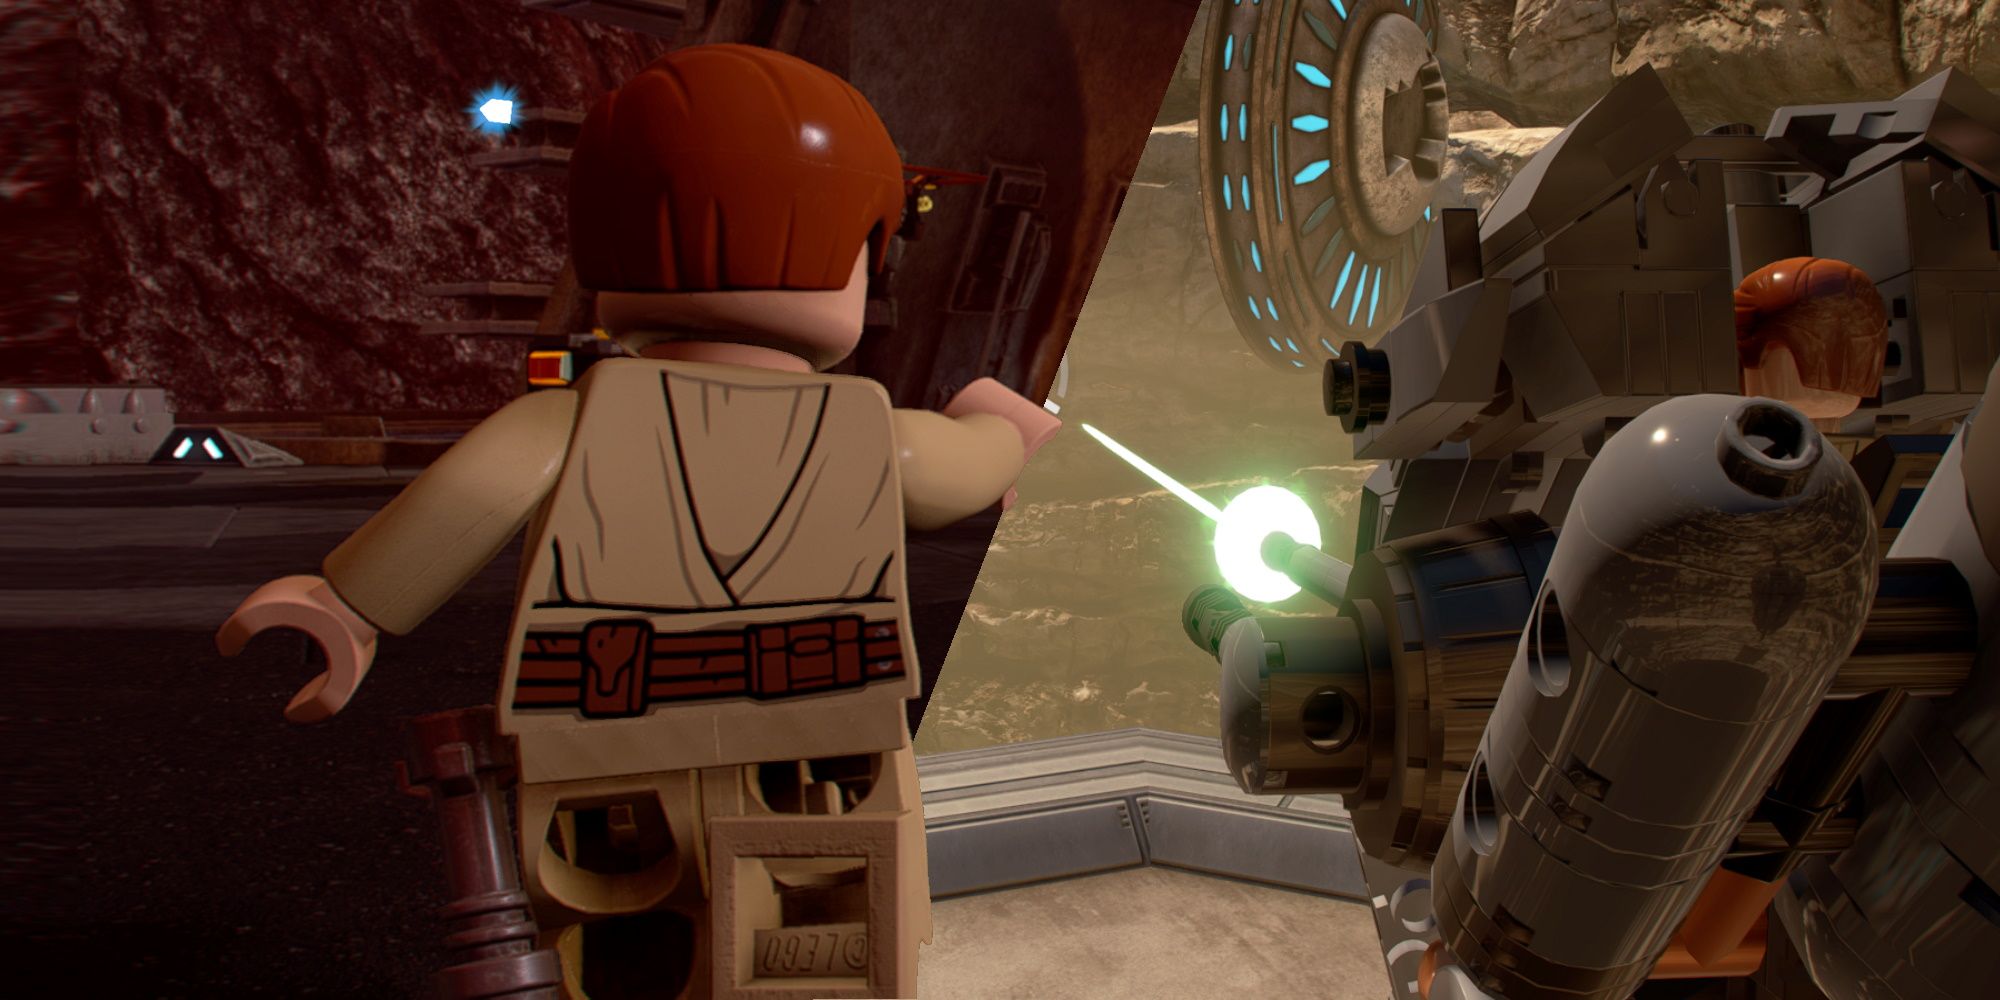 Split image of Obi-Wan using the force and piloting a turret gun